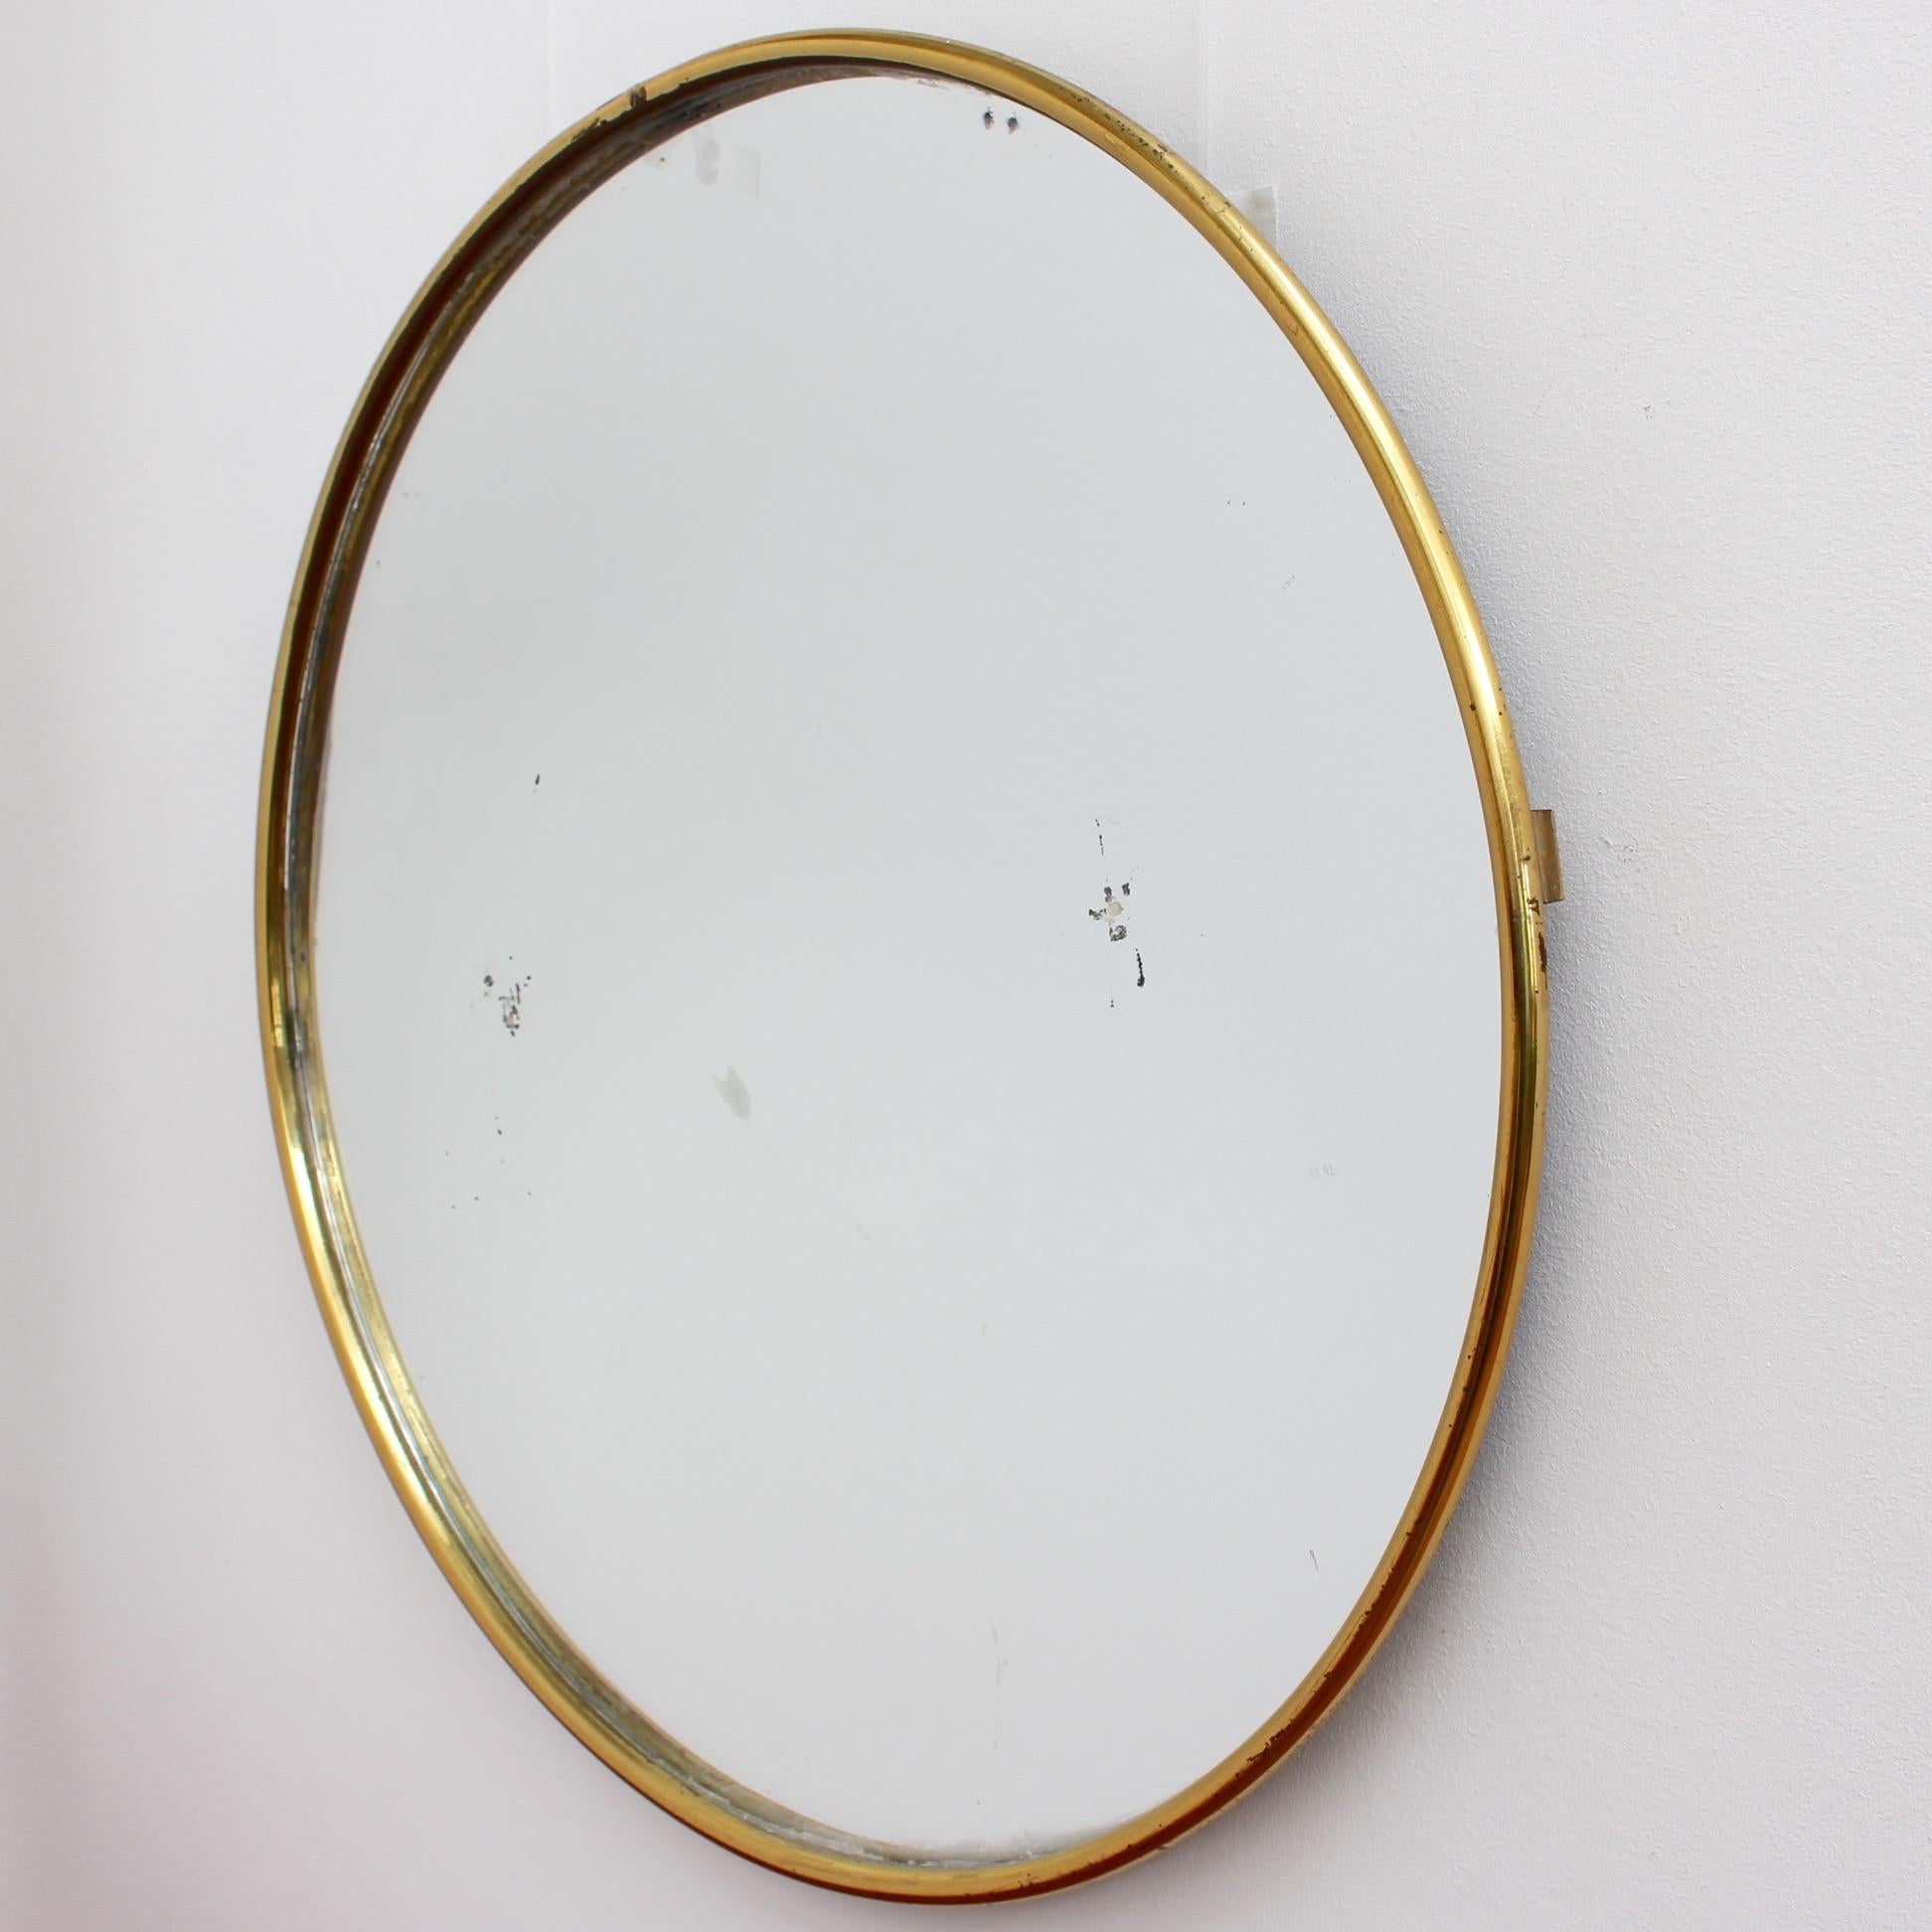 Midcentury Italian Wall Mirror with Brass Frame, circa 1950s 1